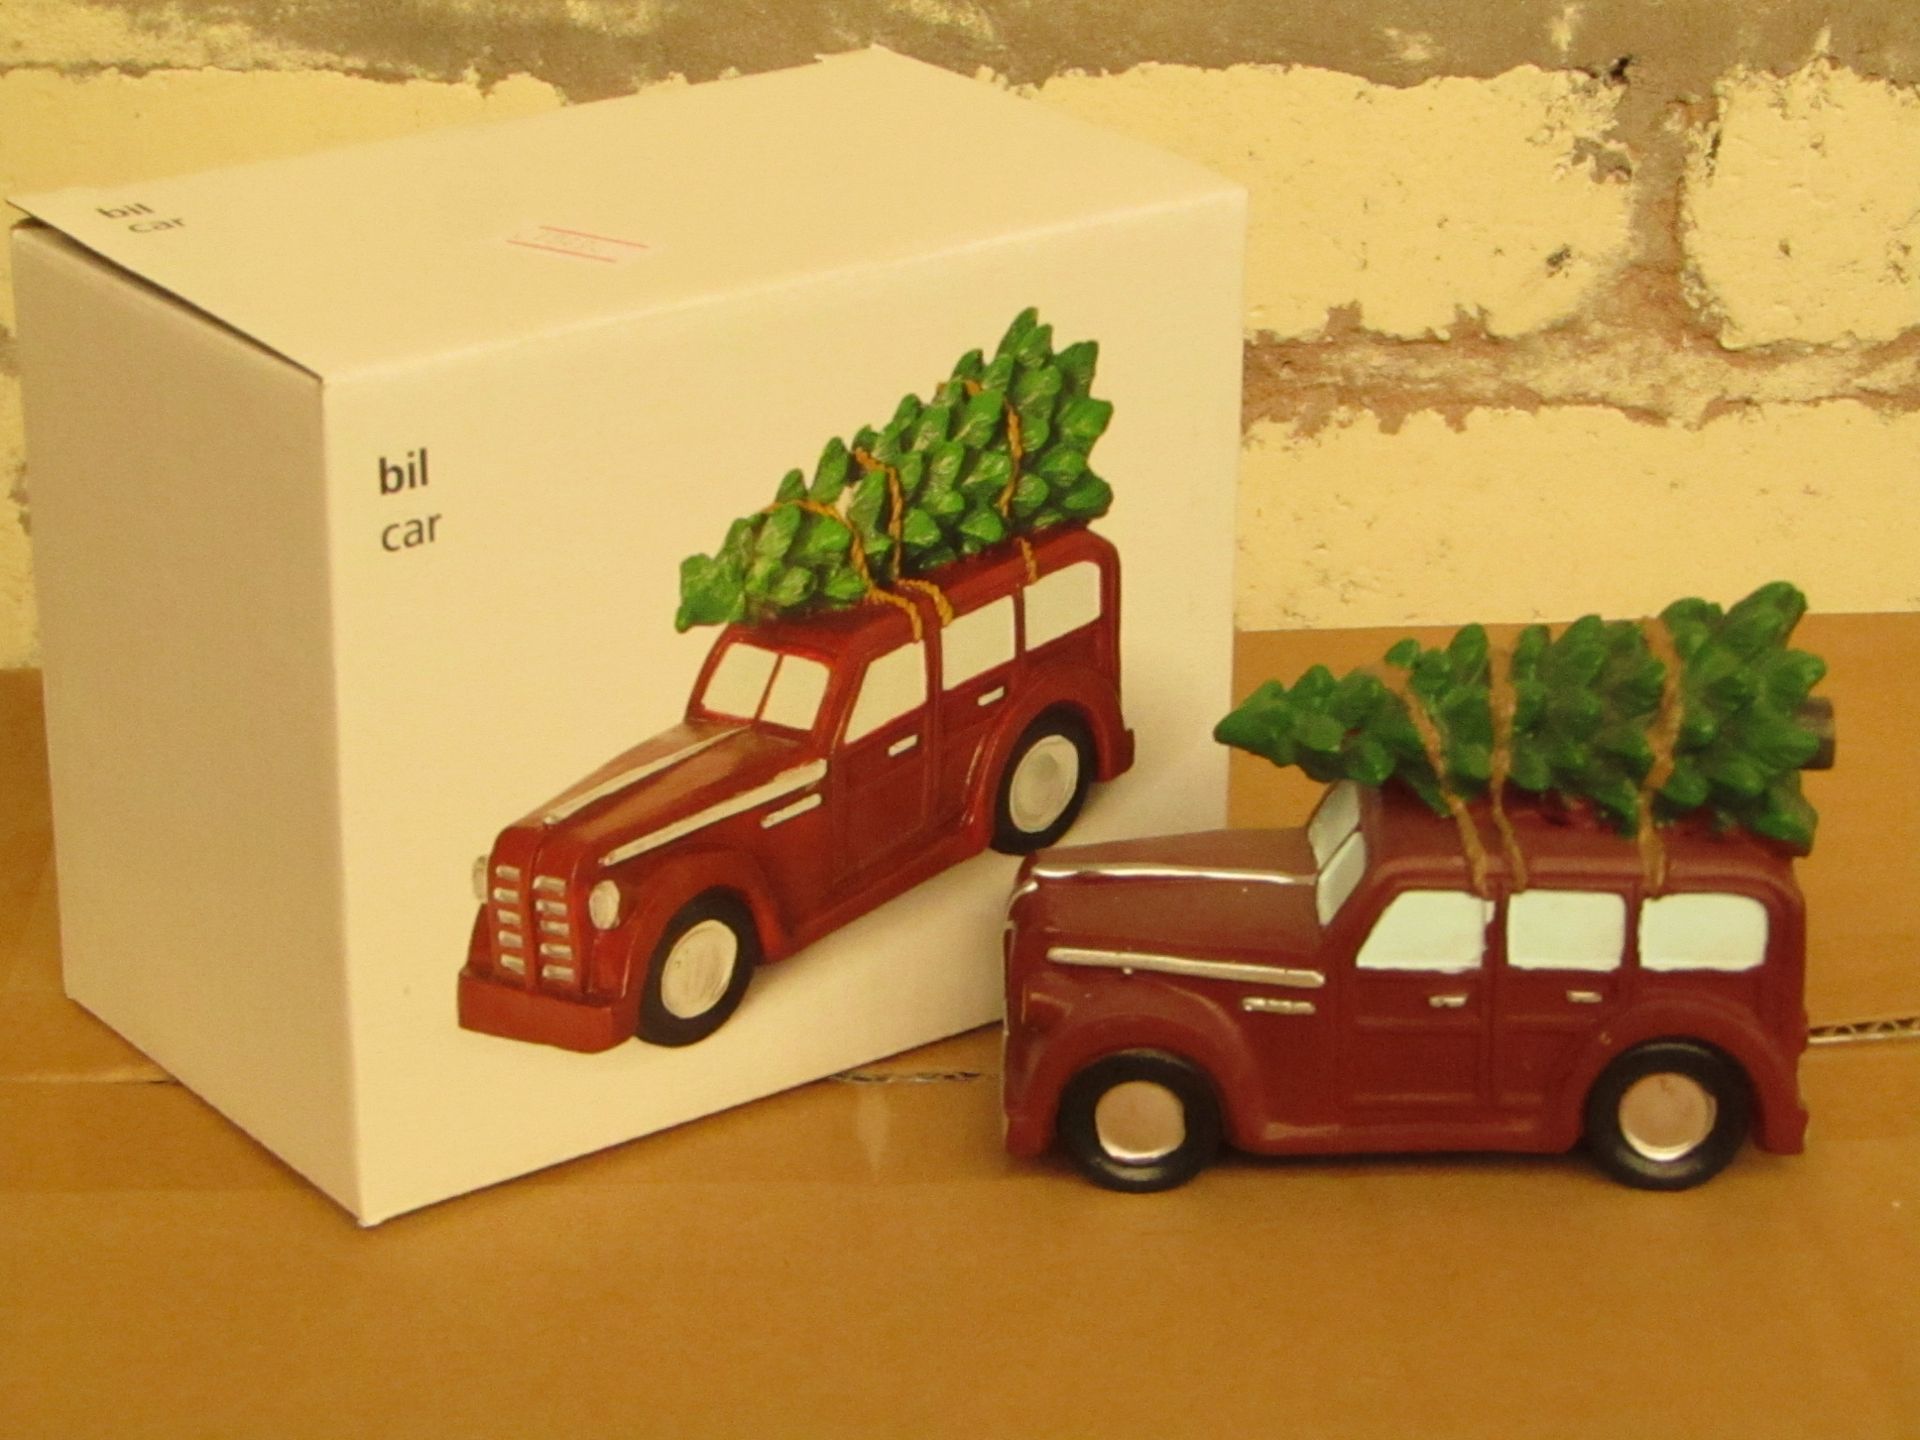 10 x Xmas tree on a car Ornaments. New & Boxed